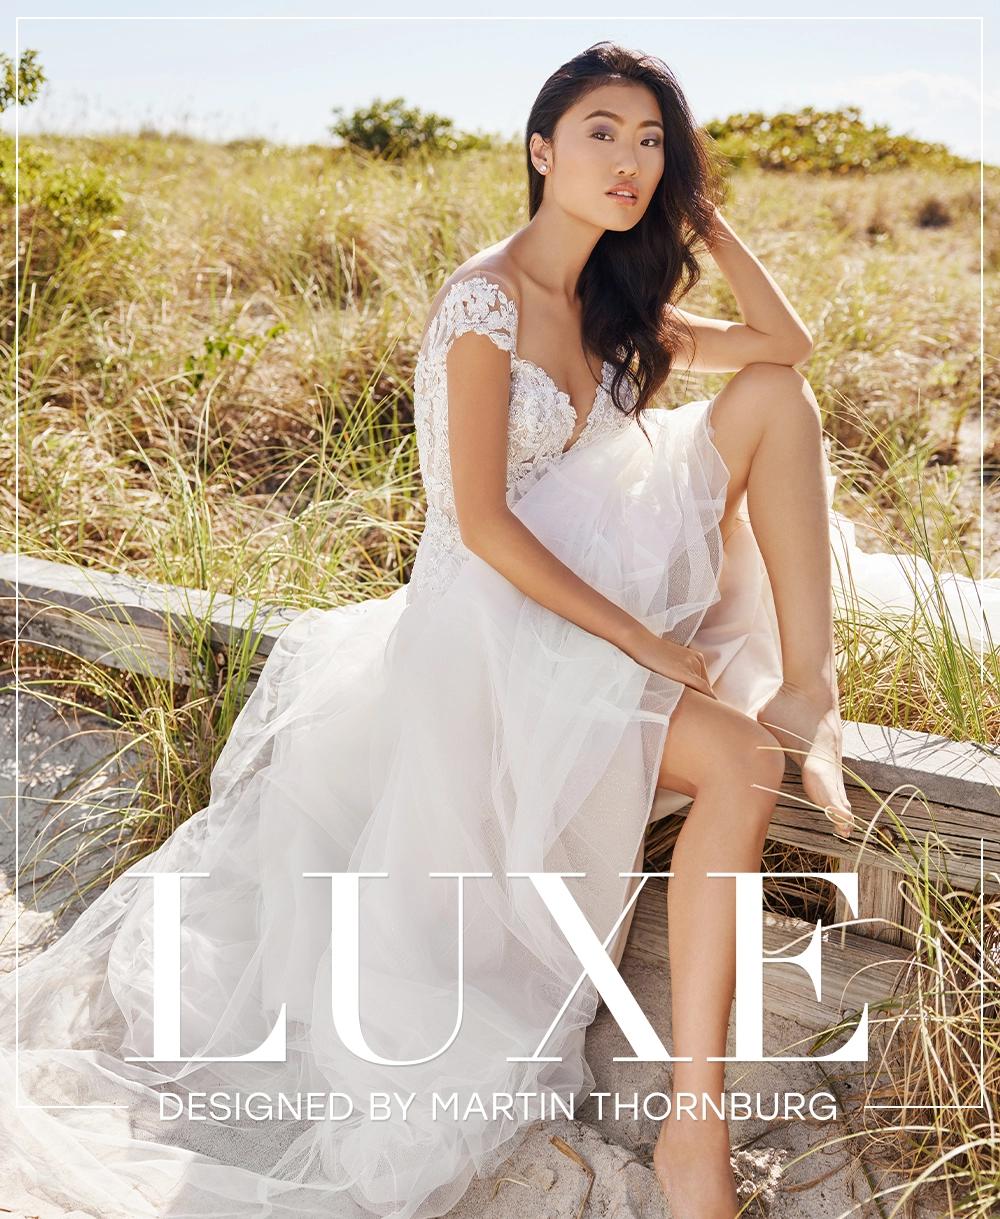 Model wearing Luxe by Martin Thornburg wedding dress